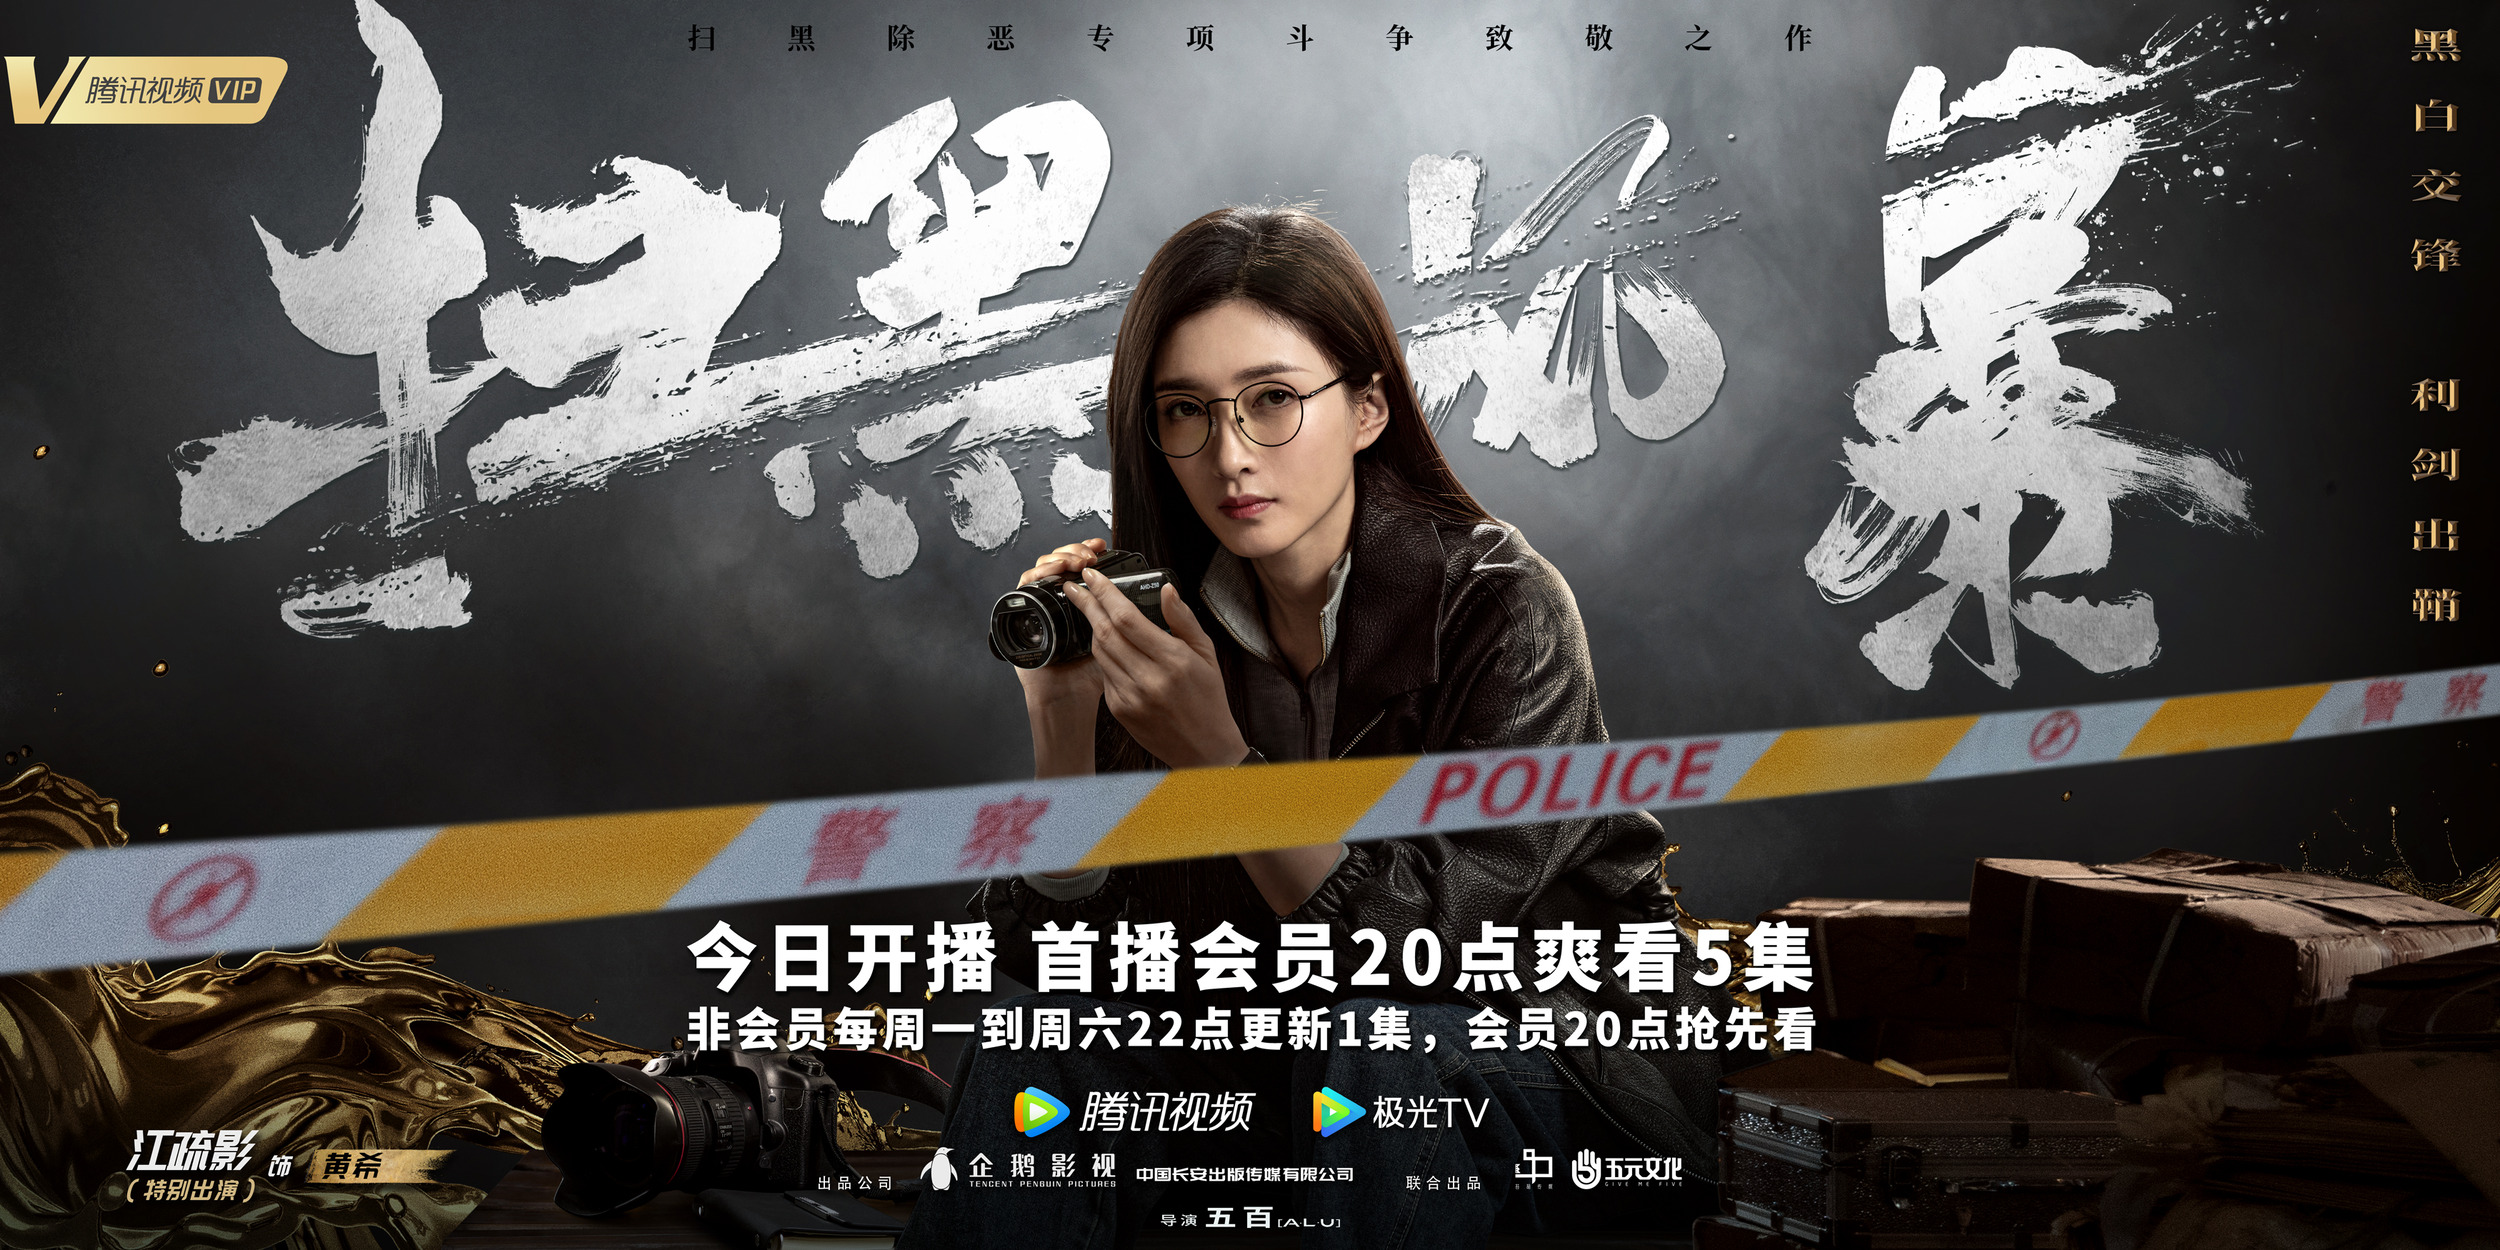 Mega Sized TV Poster Image for Sao hei feng bao (#3 of 9)